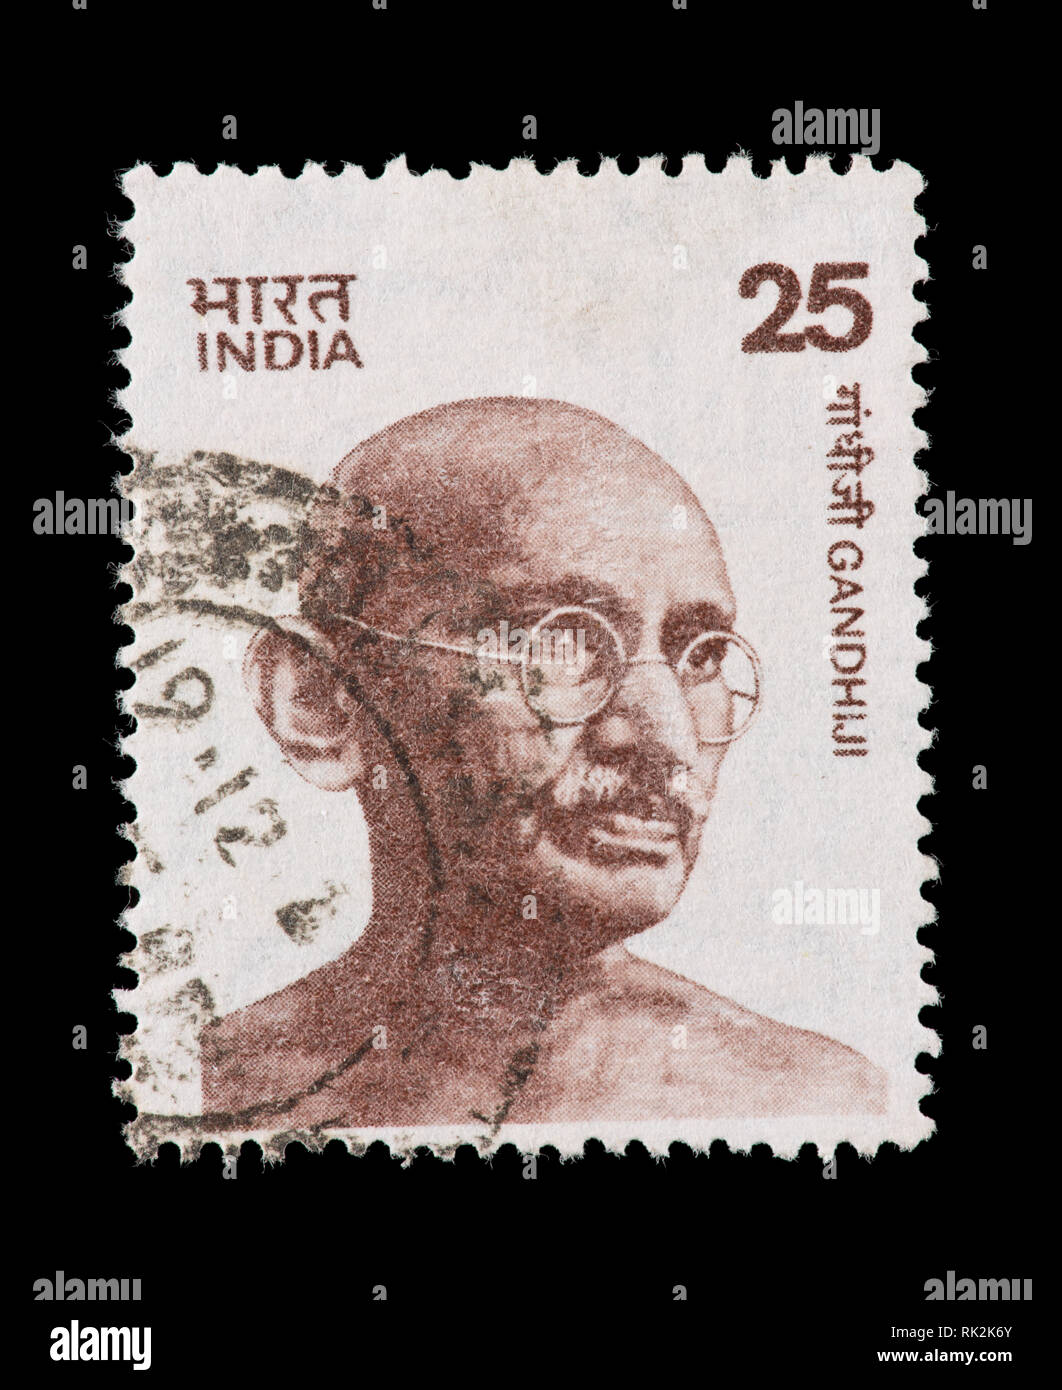 Timbre-poste de Idnia dépeignant Mohandas Karamchand Gandhi Banque D'Images